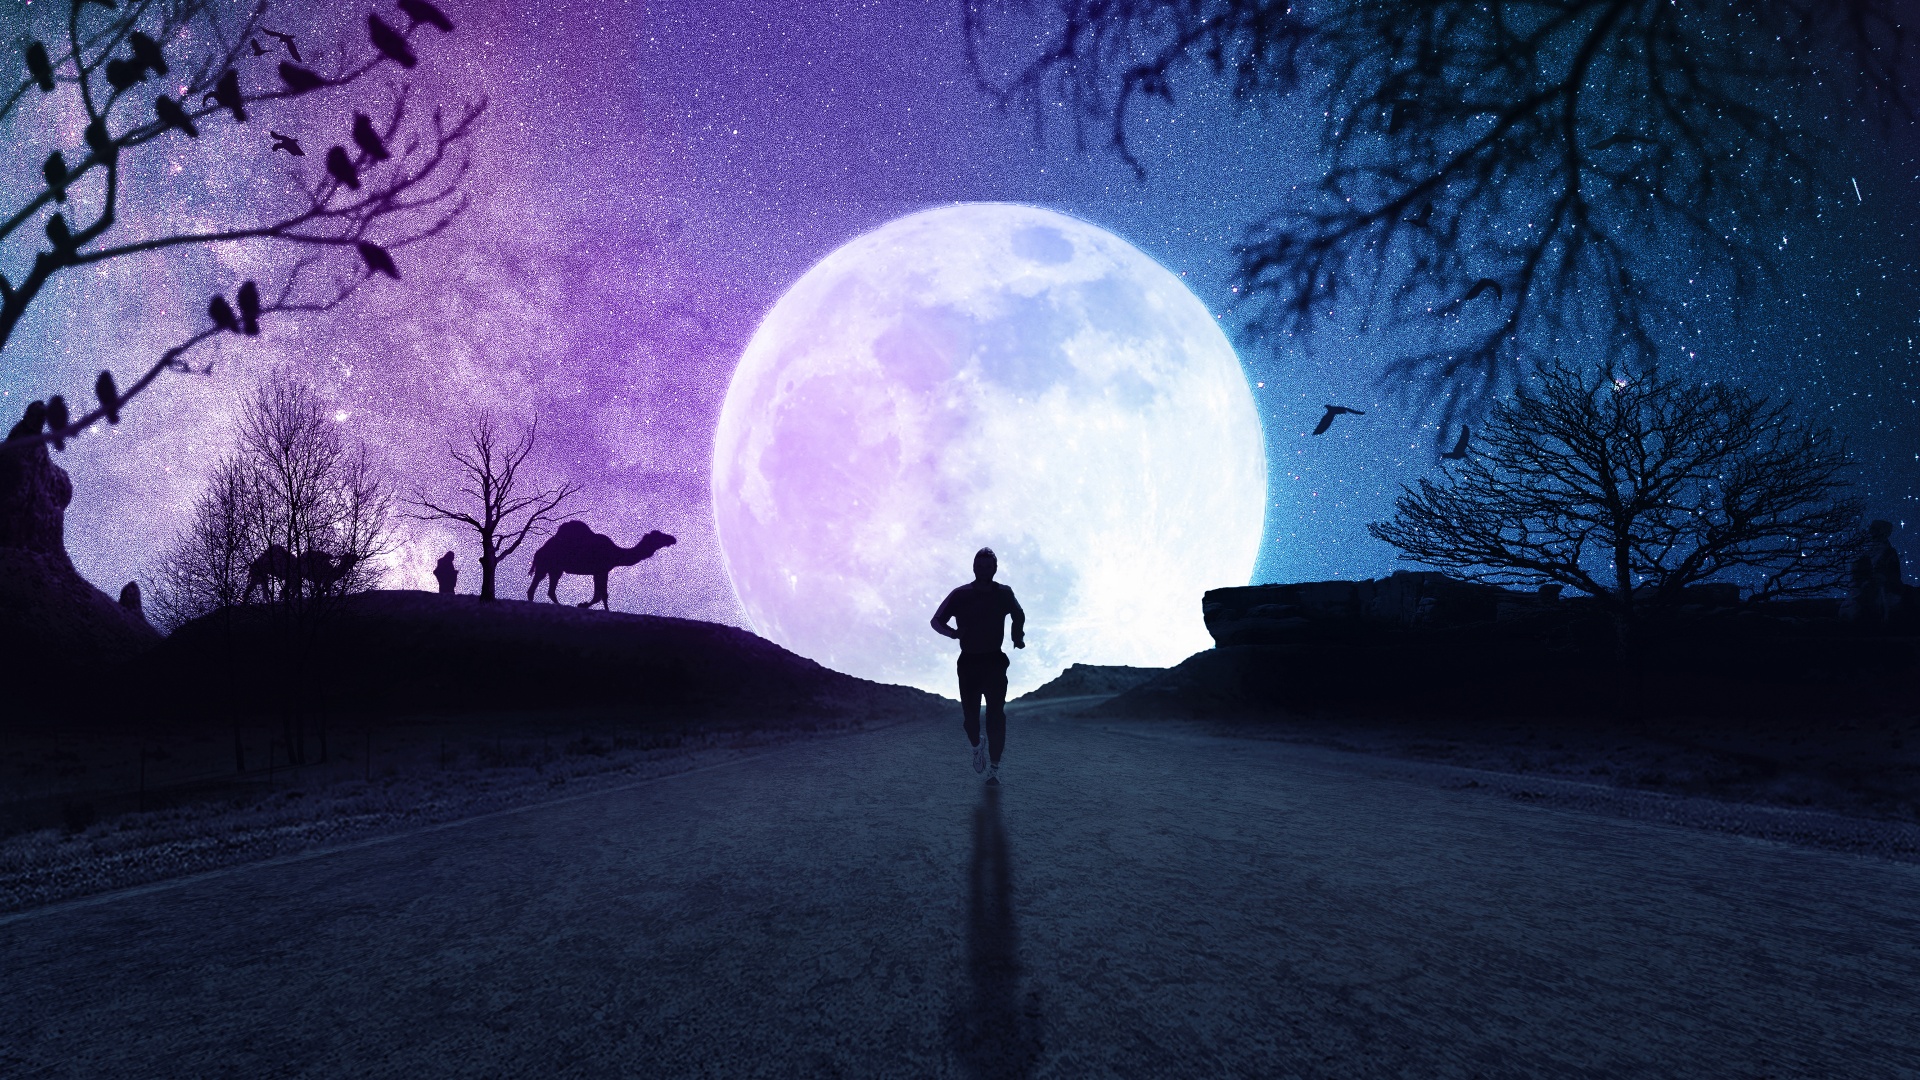 Full moon 4K Wallpaper, Silhouette, Running, Starry sky, Night, Road